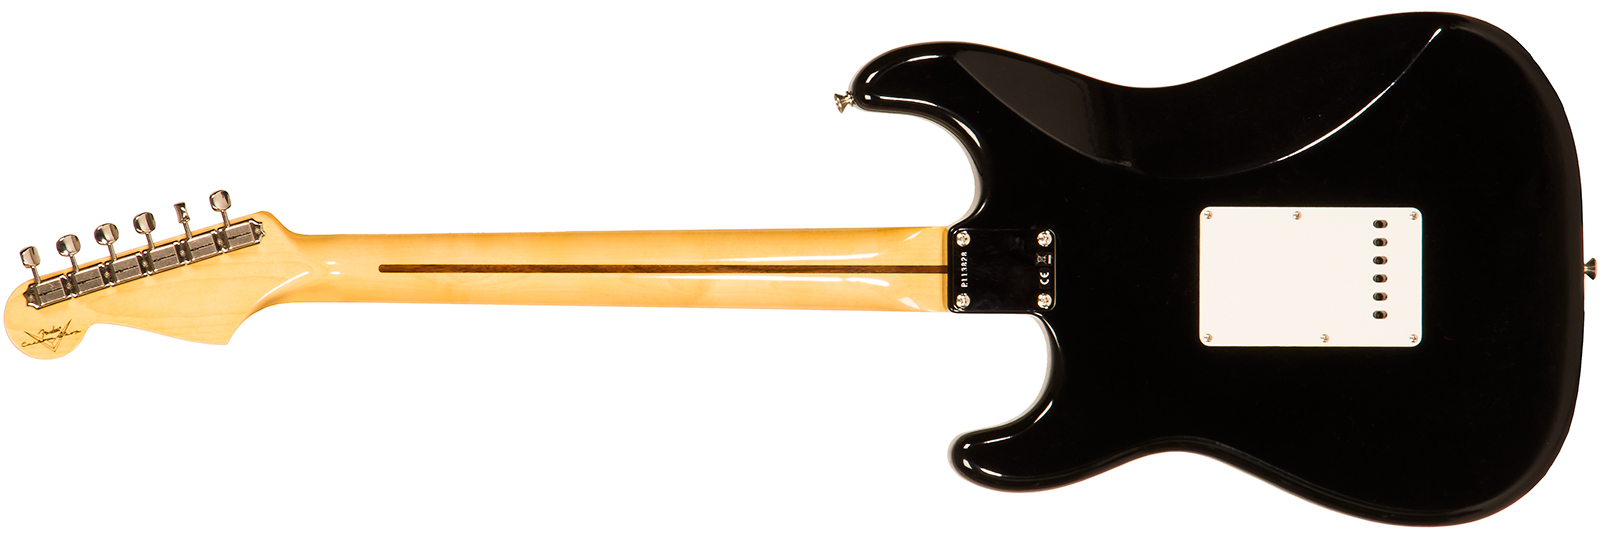 Fender Custom Shop Strat 1958 3s Trem Mn #r113828 - Closet Classic Black - Guitarra eléctrica con forma de str. - Variation 1